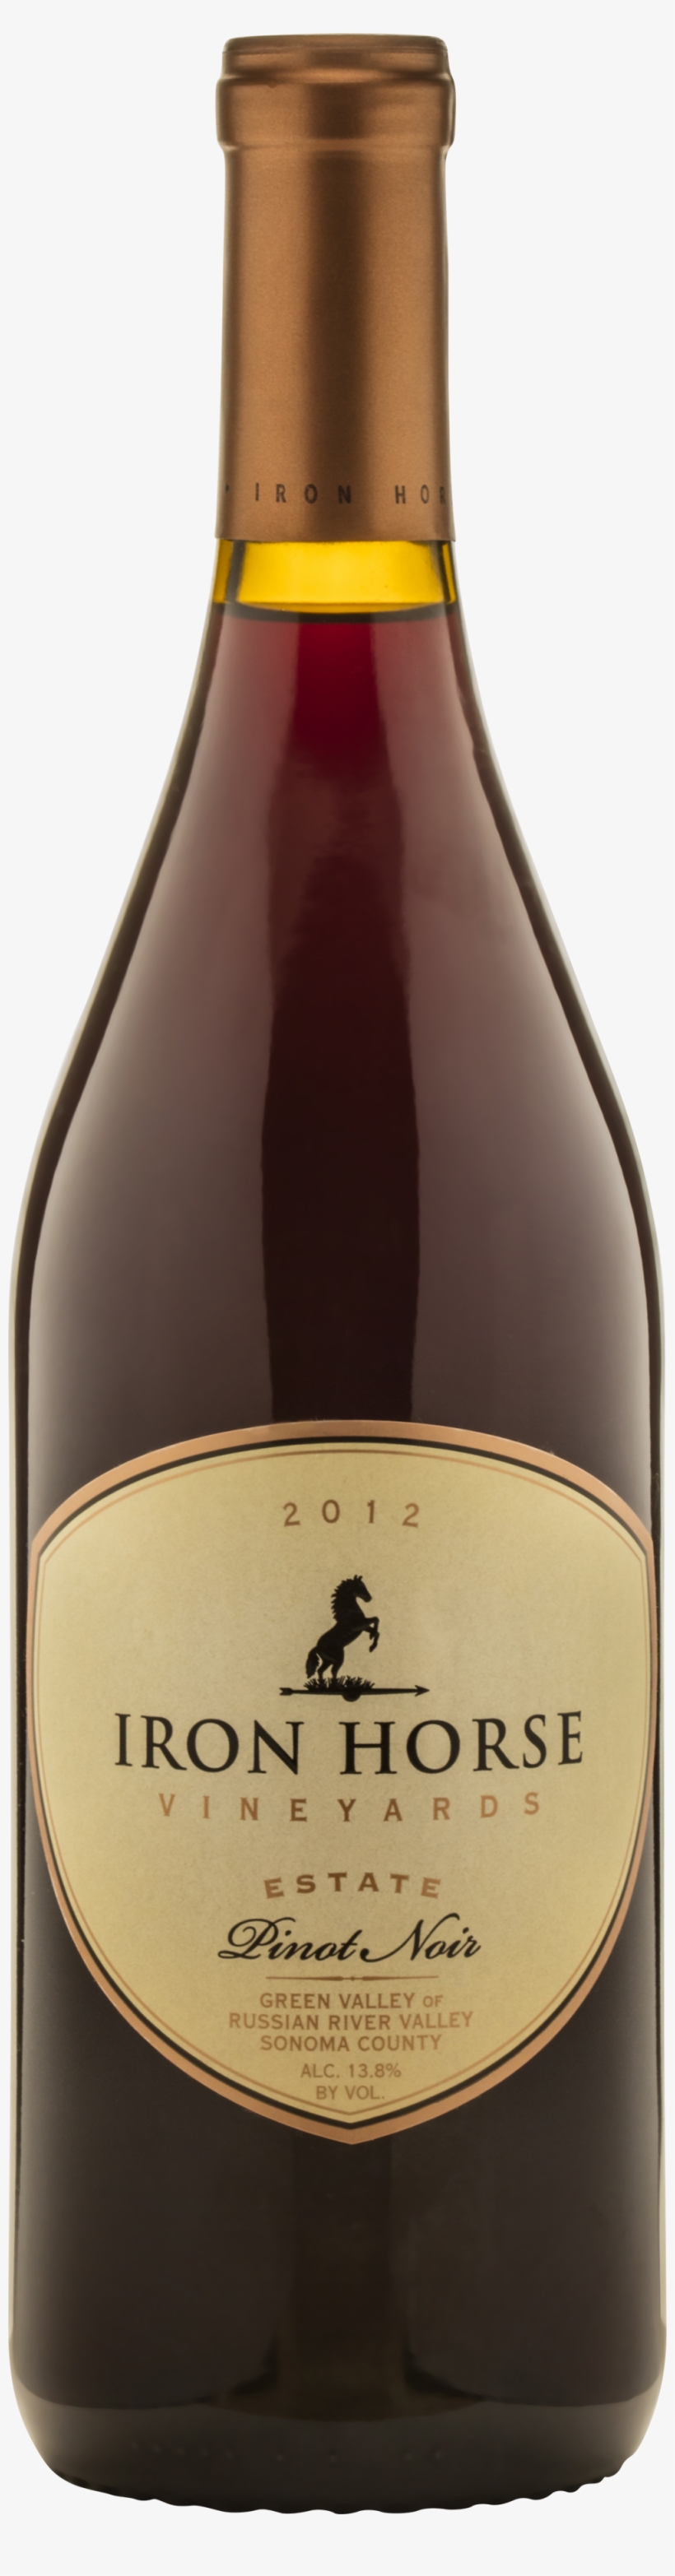 2012 Estate Pinot Noir Png - Iron Horse Vineyards, transparent png #4809567